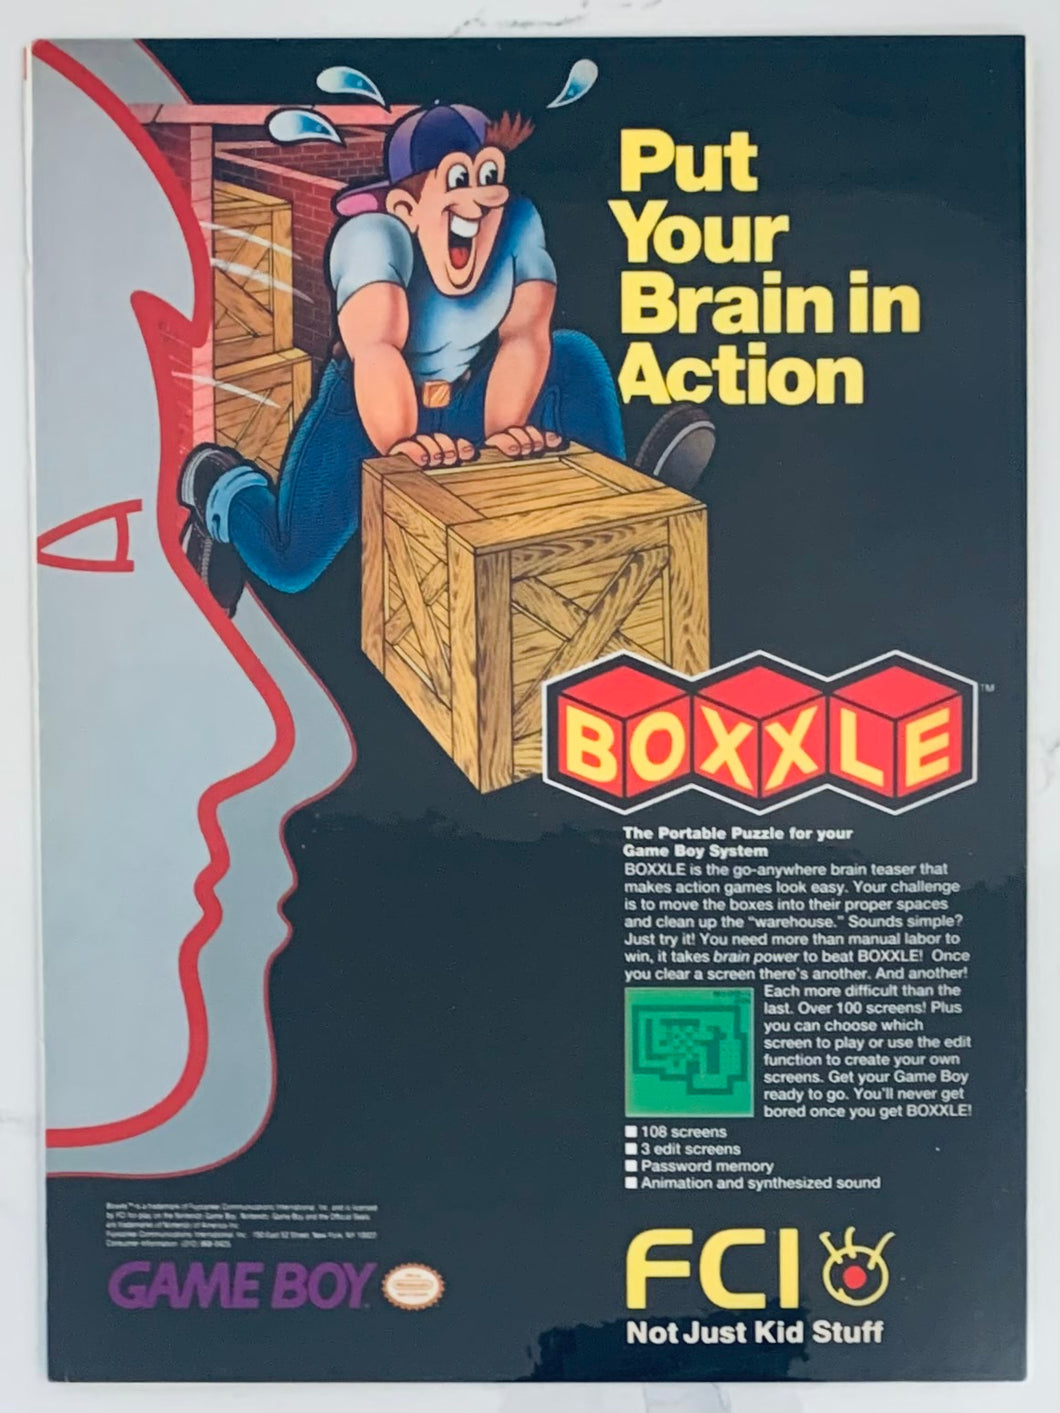 Boxxle - GameBoy - Original Vintage Advertisement - Print Ads - Laminated A4 Poster